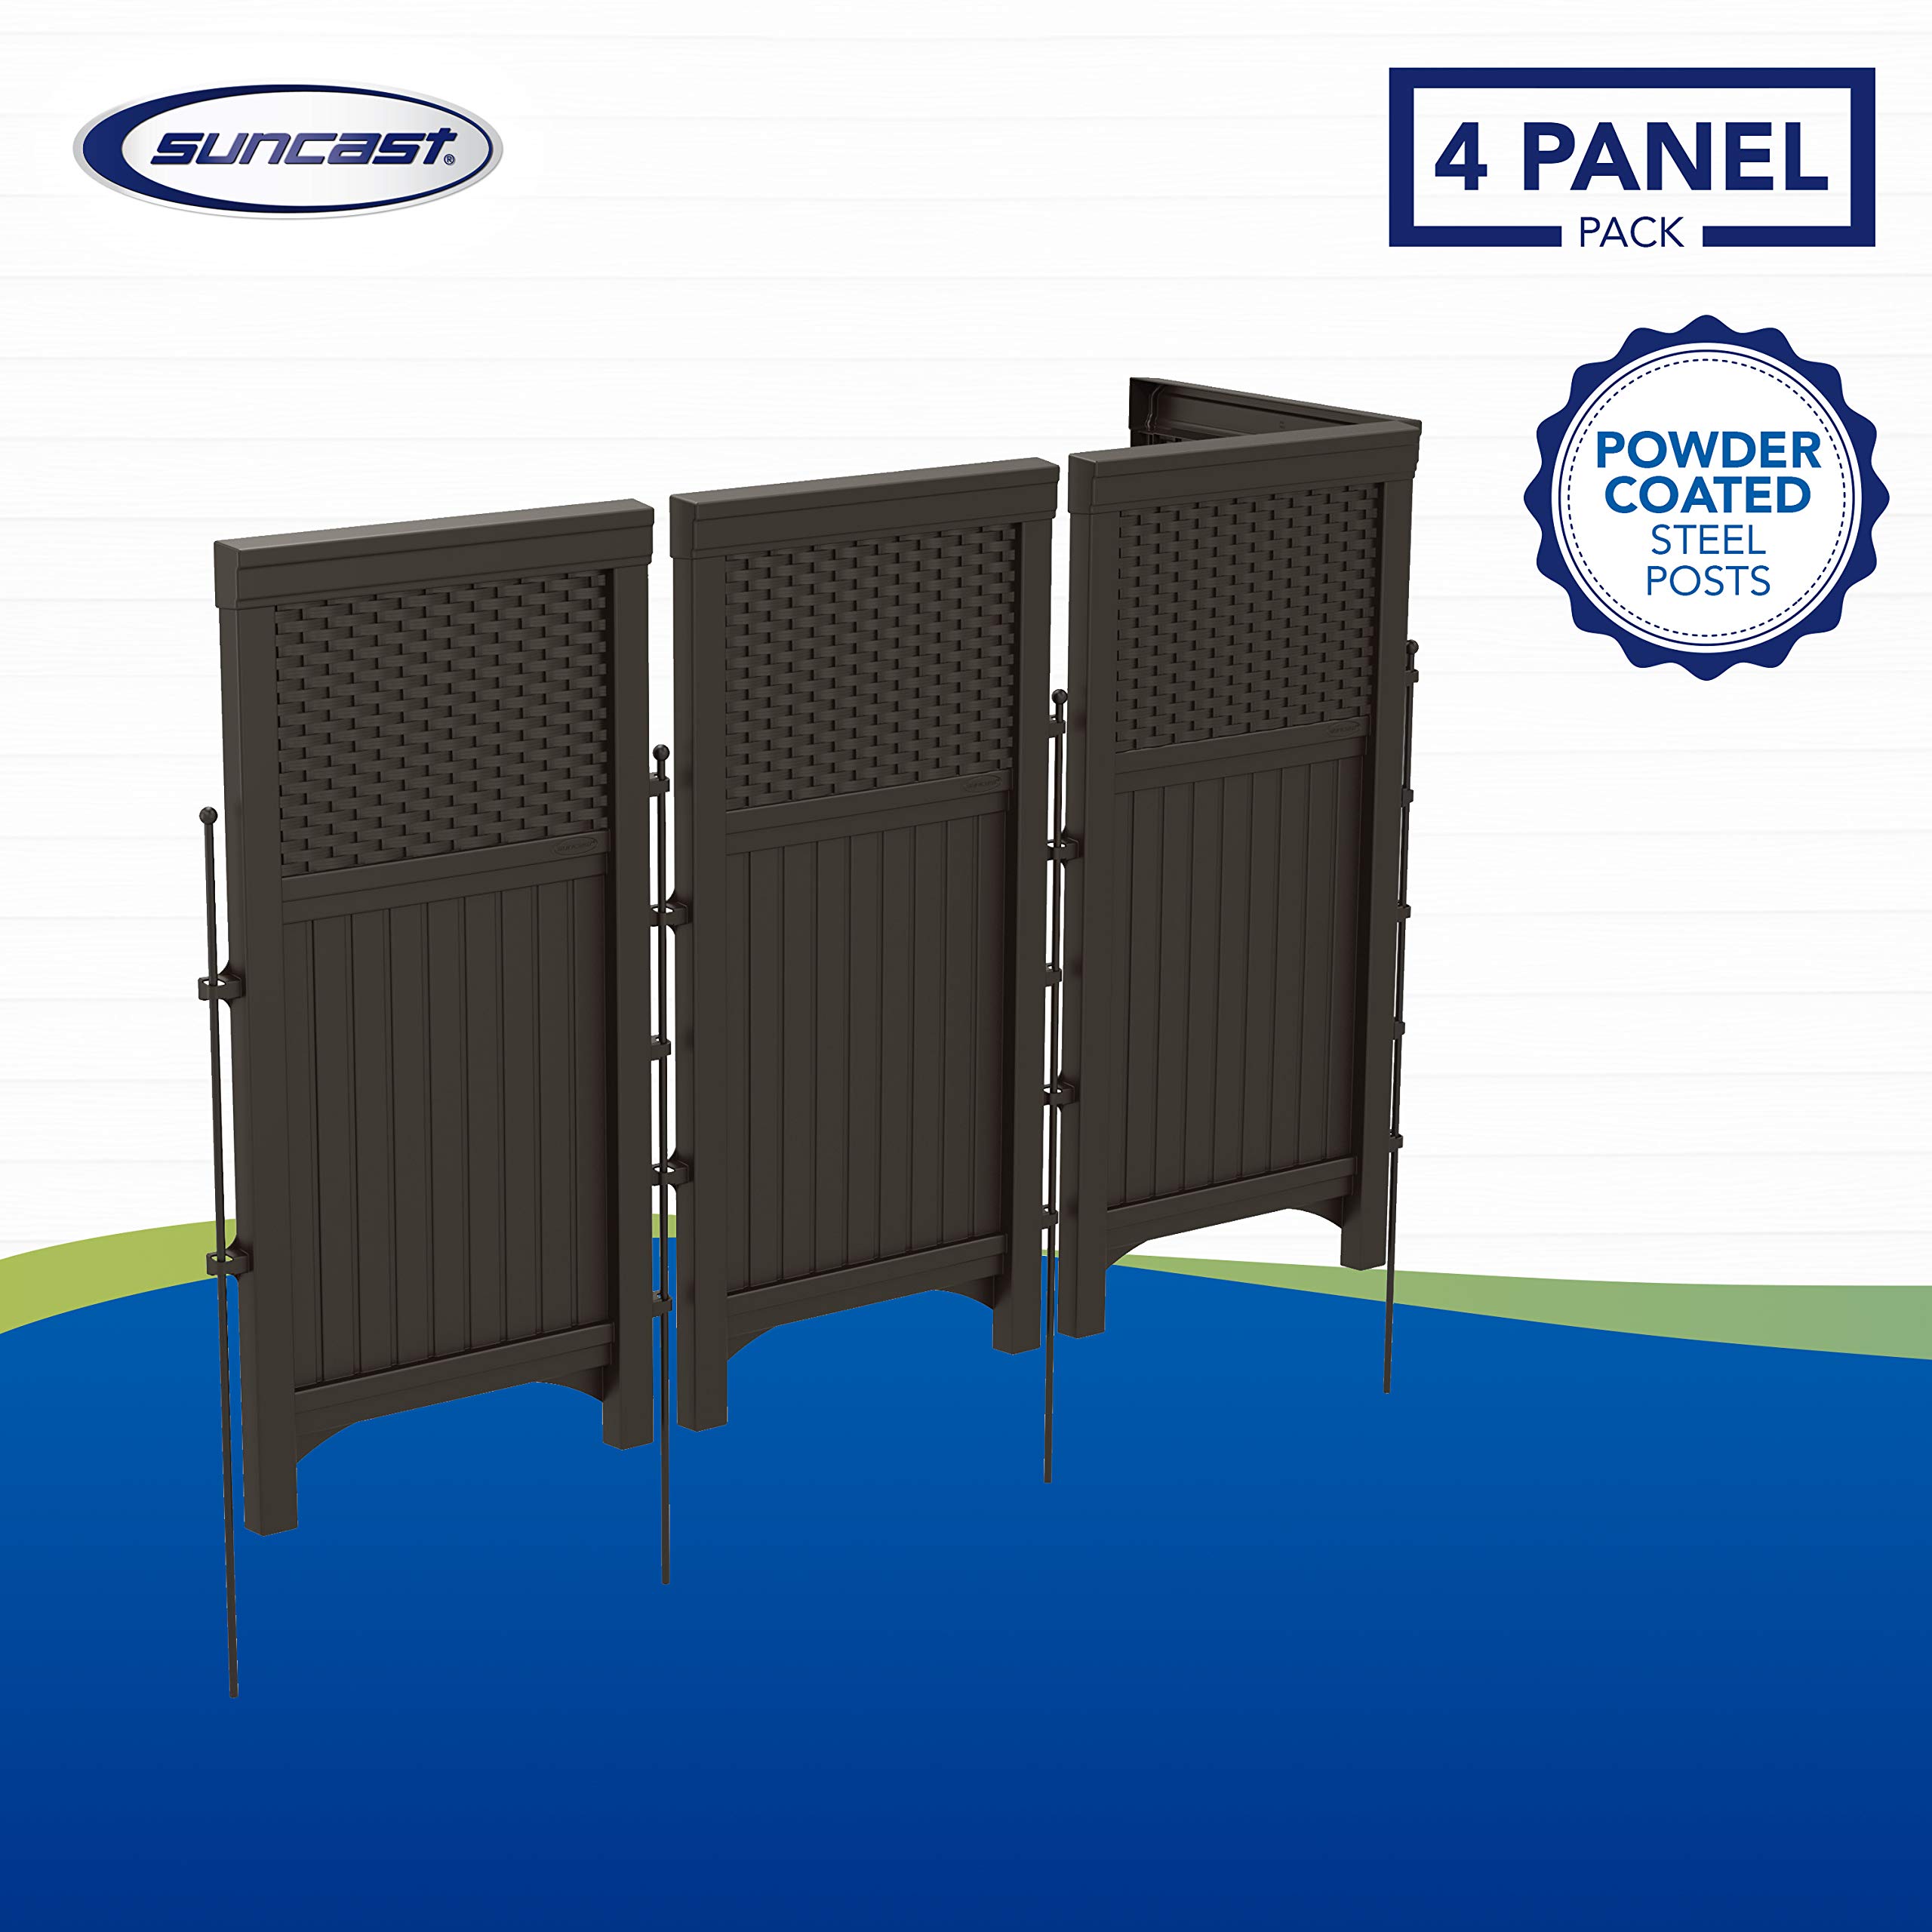 Suncast Wicker Resin Garden Fence Bundle (4 Panels) + Deck Box for Storage